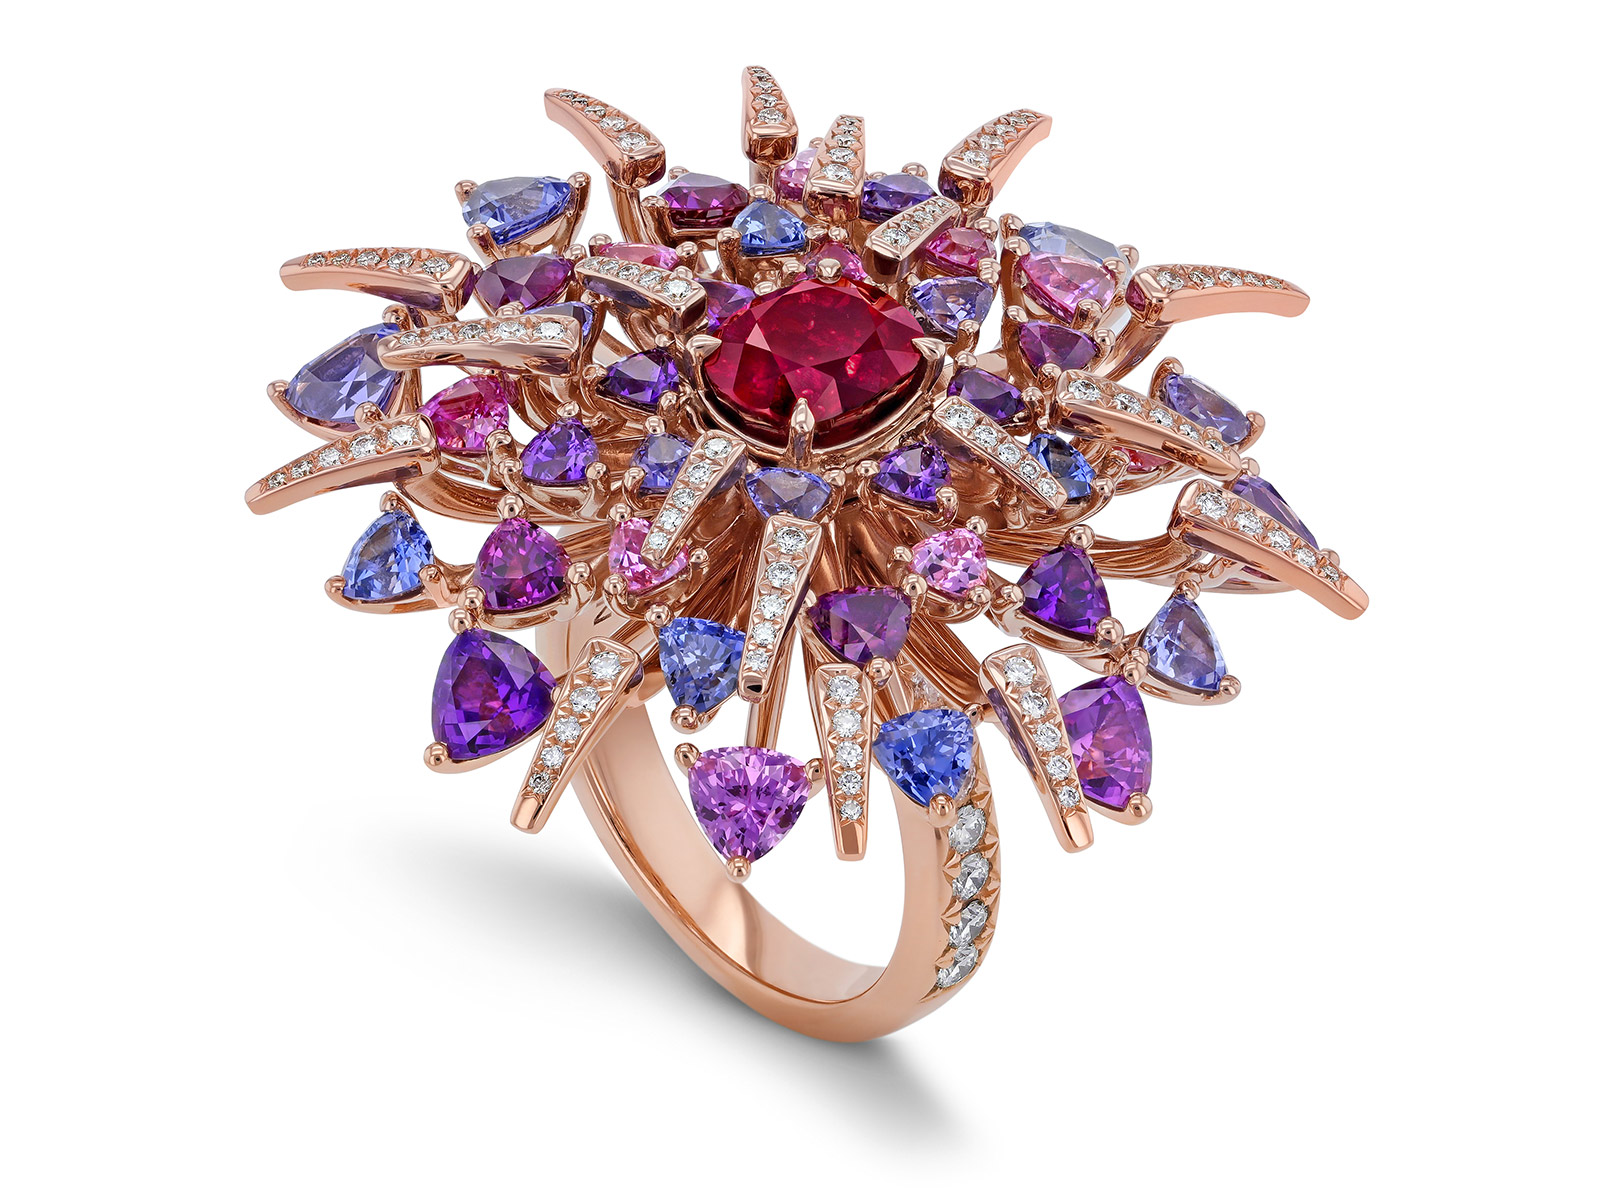 Gübelin 'Red Dahlia' ring with oval cut 2.18ct Burmese ruby, trillion cut sapphires and brilliant cut diamonds